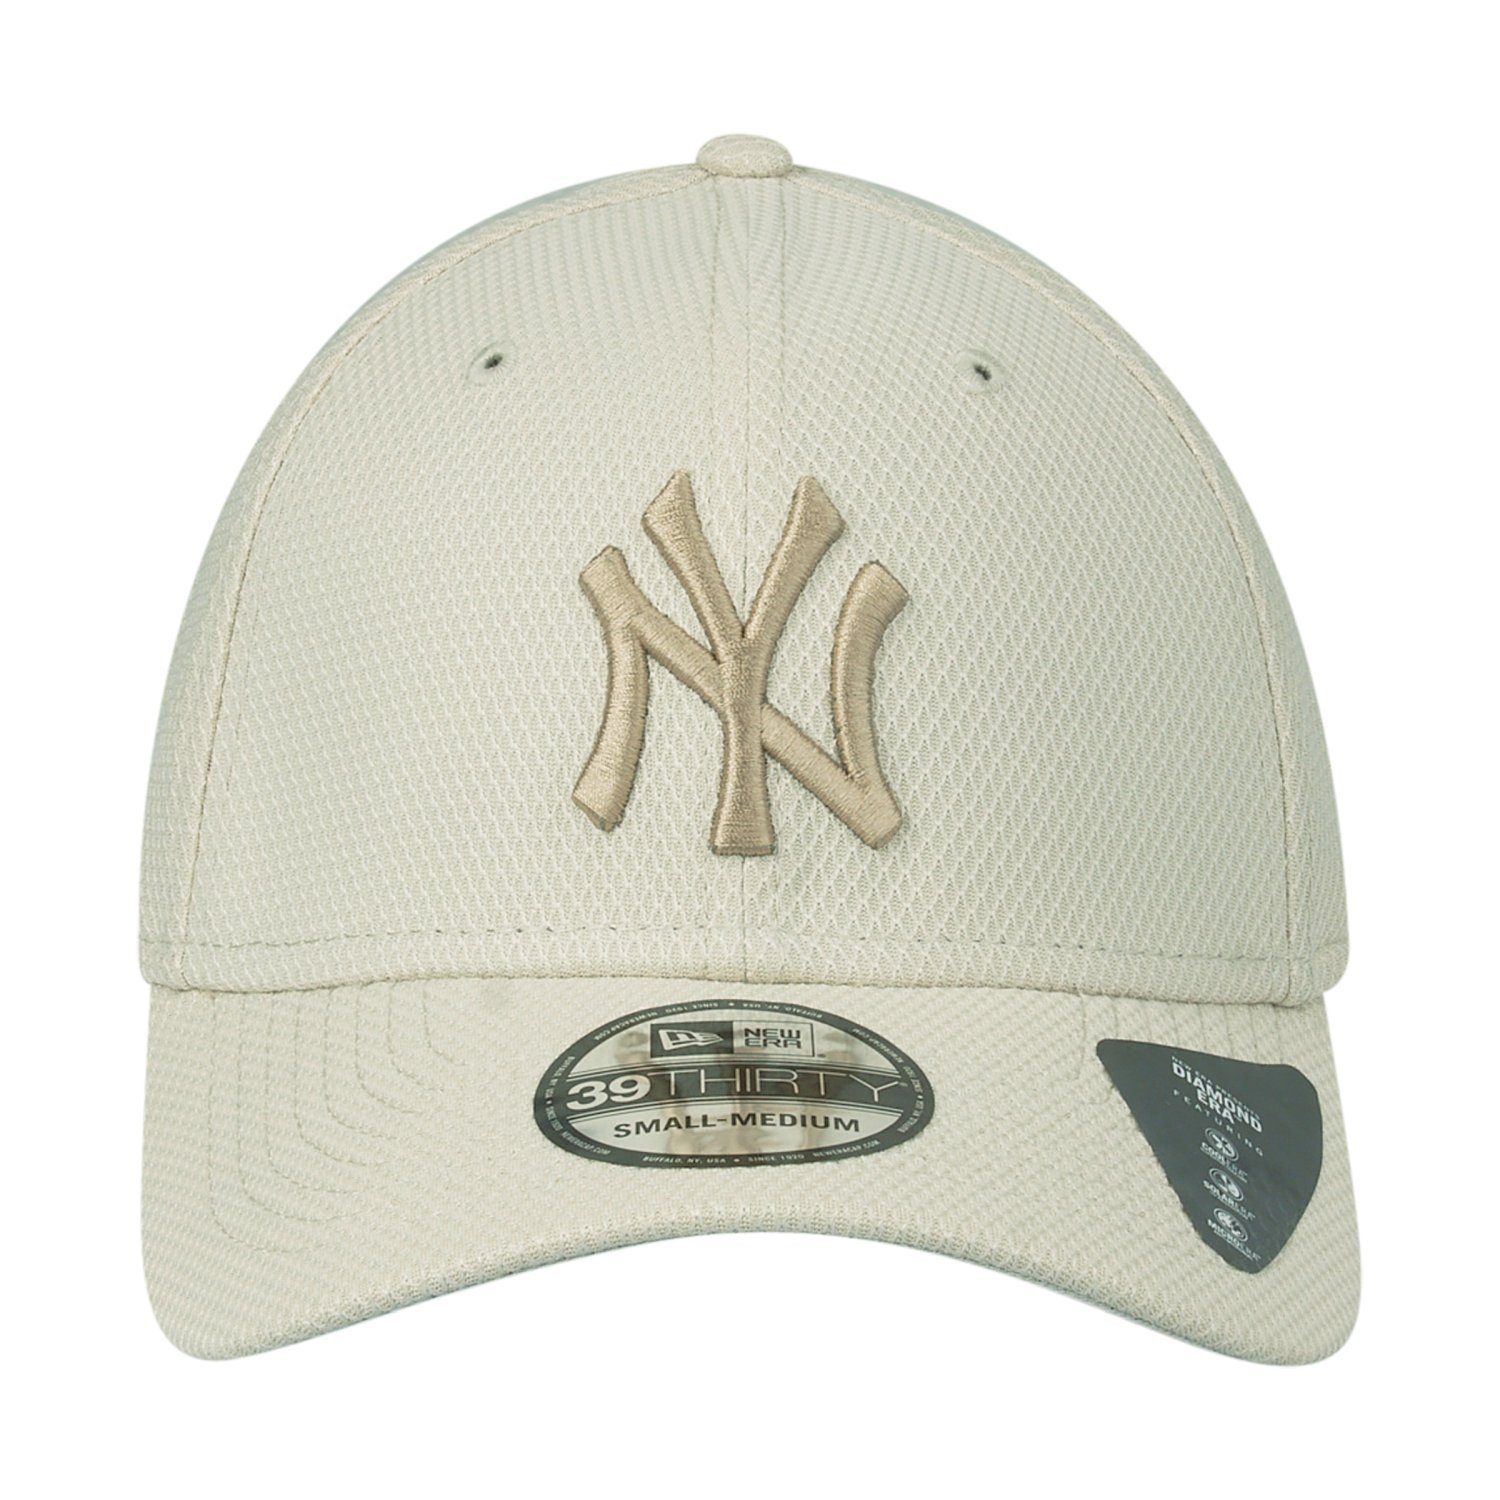 New StretchFit York Era DIAMOND New Cap Flex 39Thirty Yankees Beige